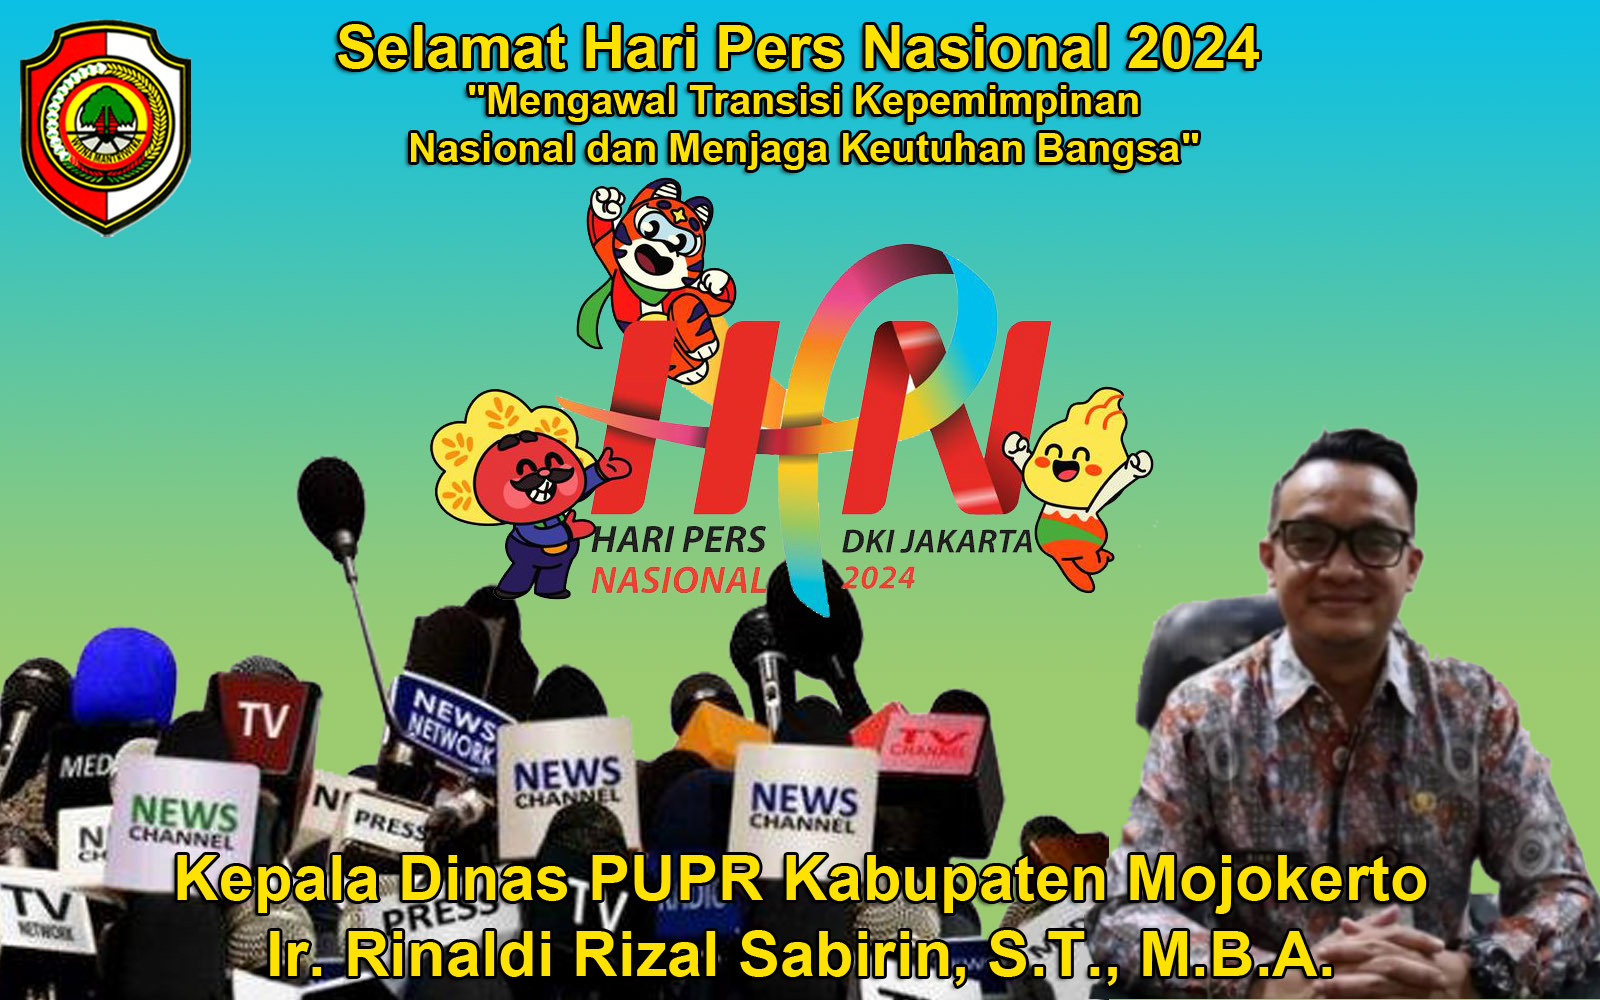 Ir. Rinaldi Rizal Sabirin, S.T., M.B.A. Kepala Dinas PUPR Kabupaten Mojokerto Mengucapkan Selamat Hari Pers Nasional 2024